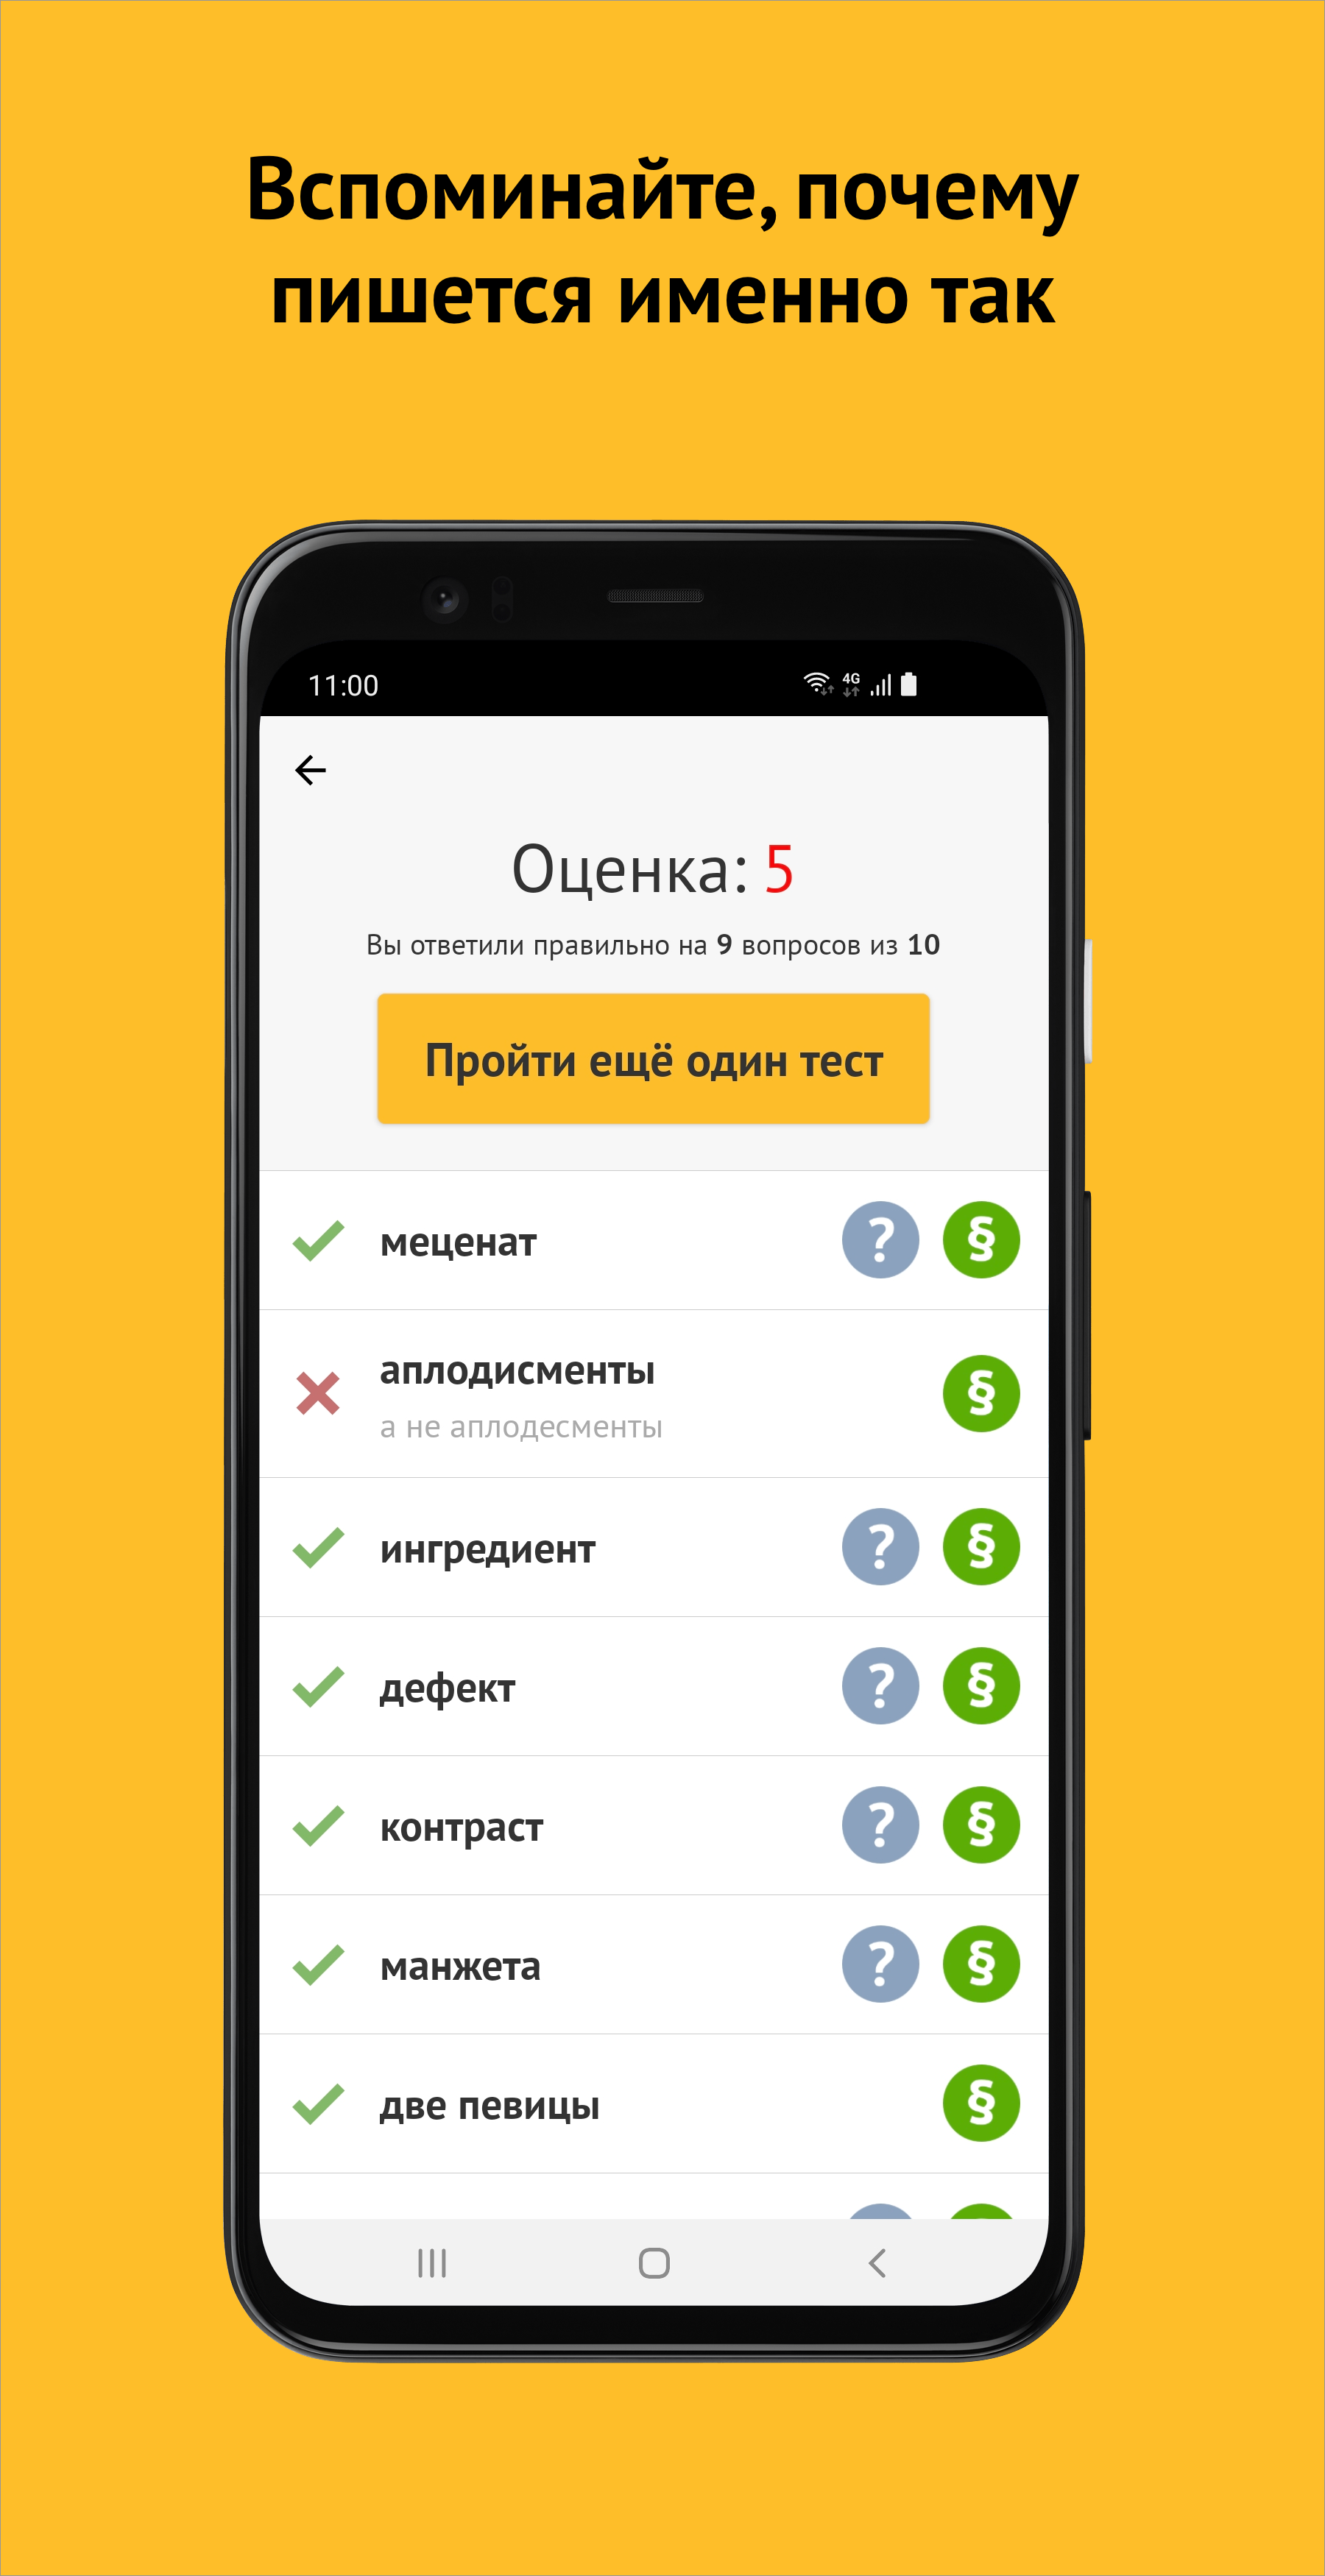 Android application Орфография русского языка screenshort